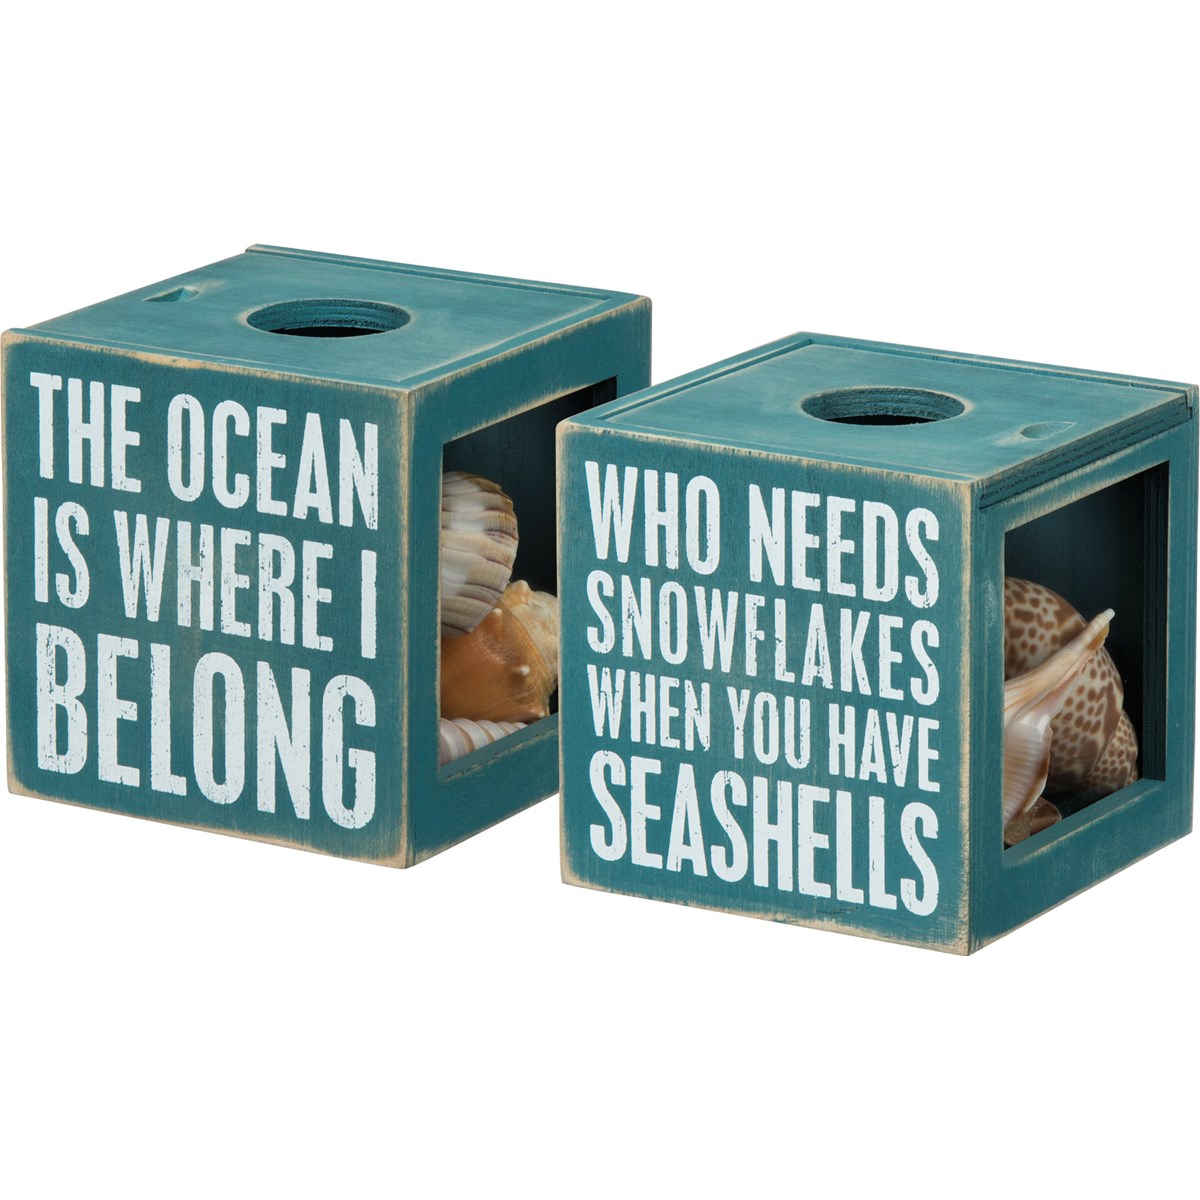 Shell Holder - The Ocean Is Where I Belong - 4.25" x 4.25" x 4.25" - Wood, Glass